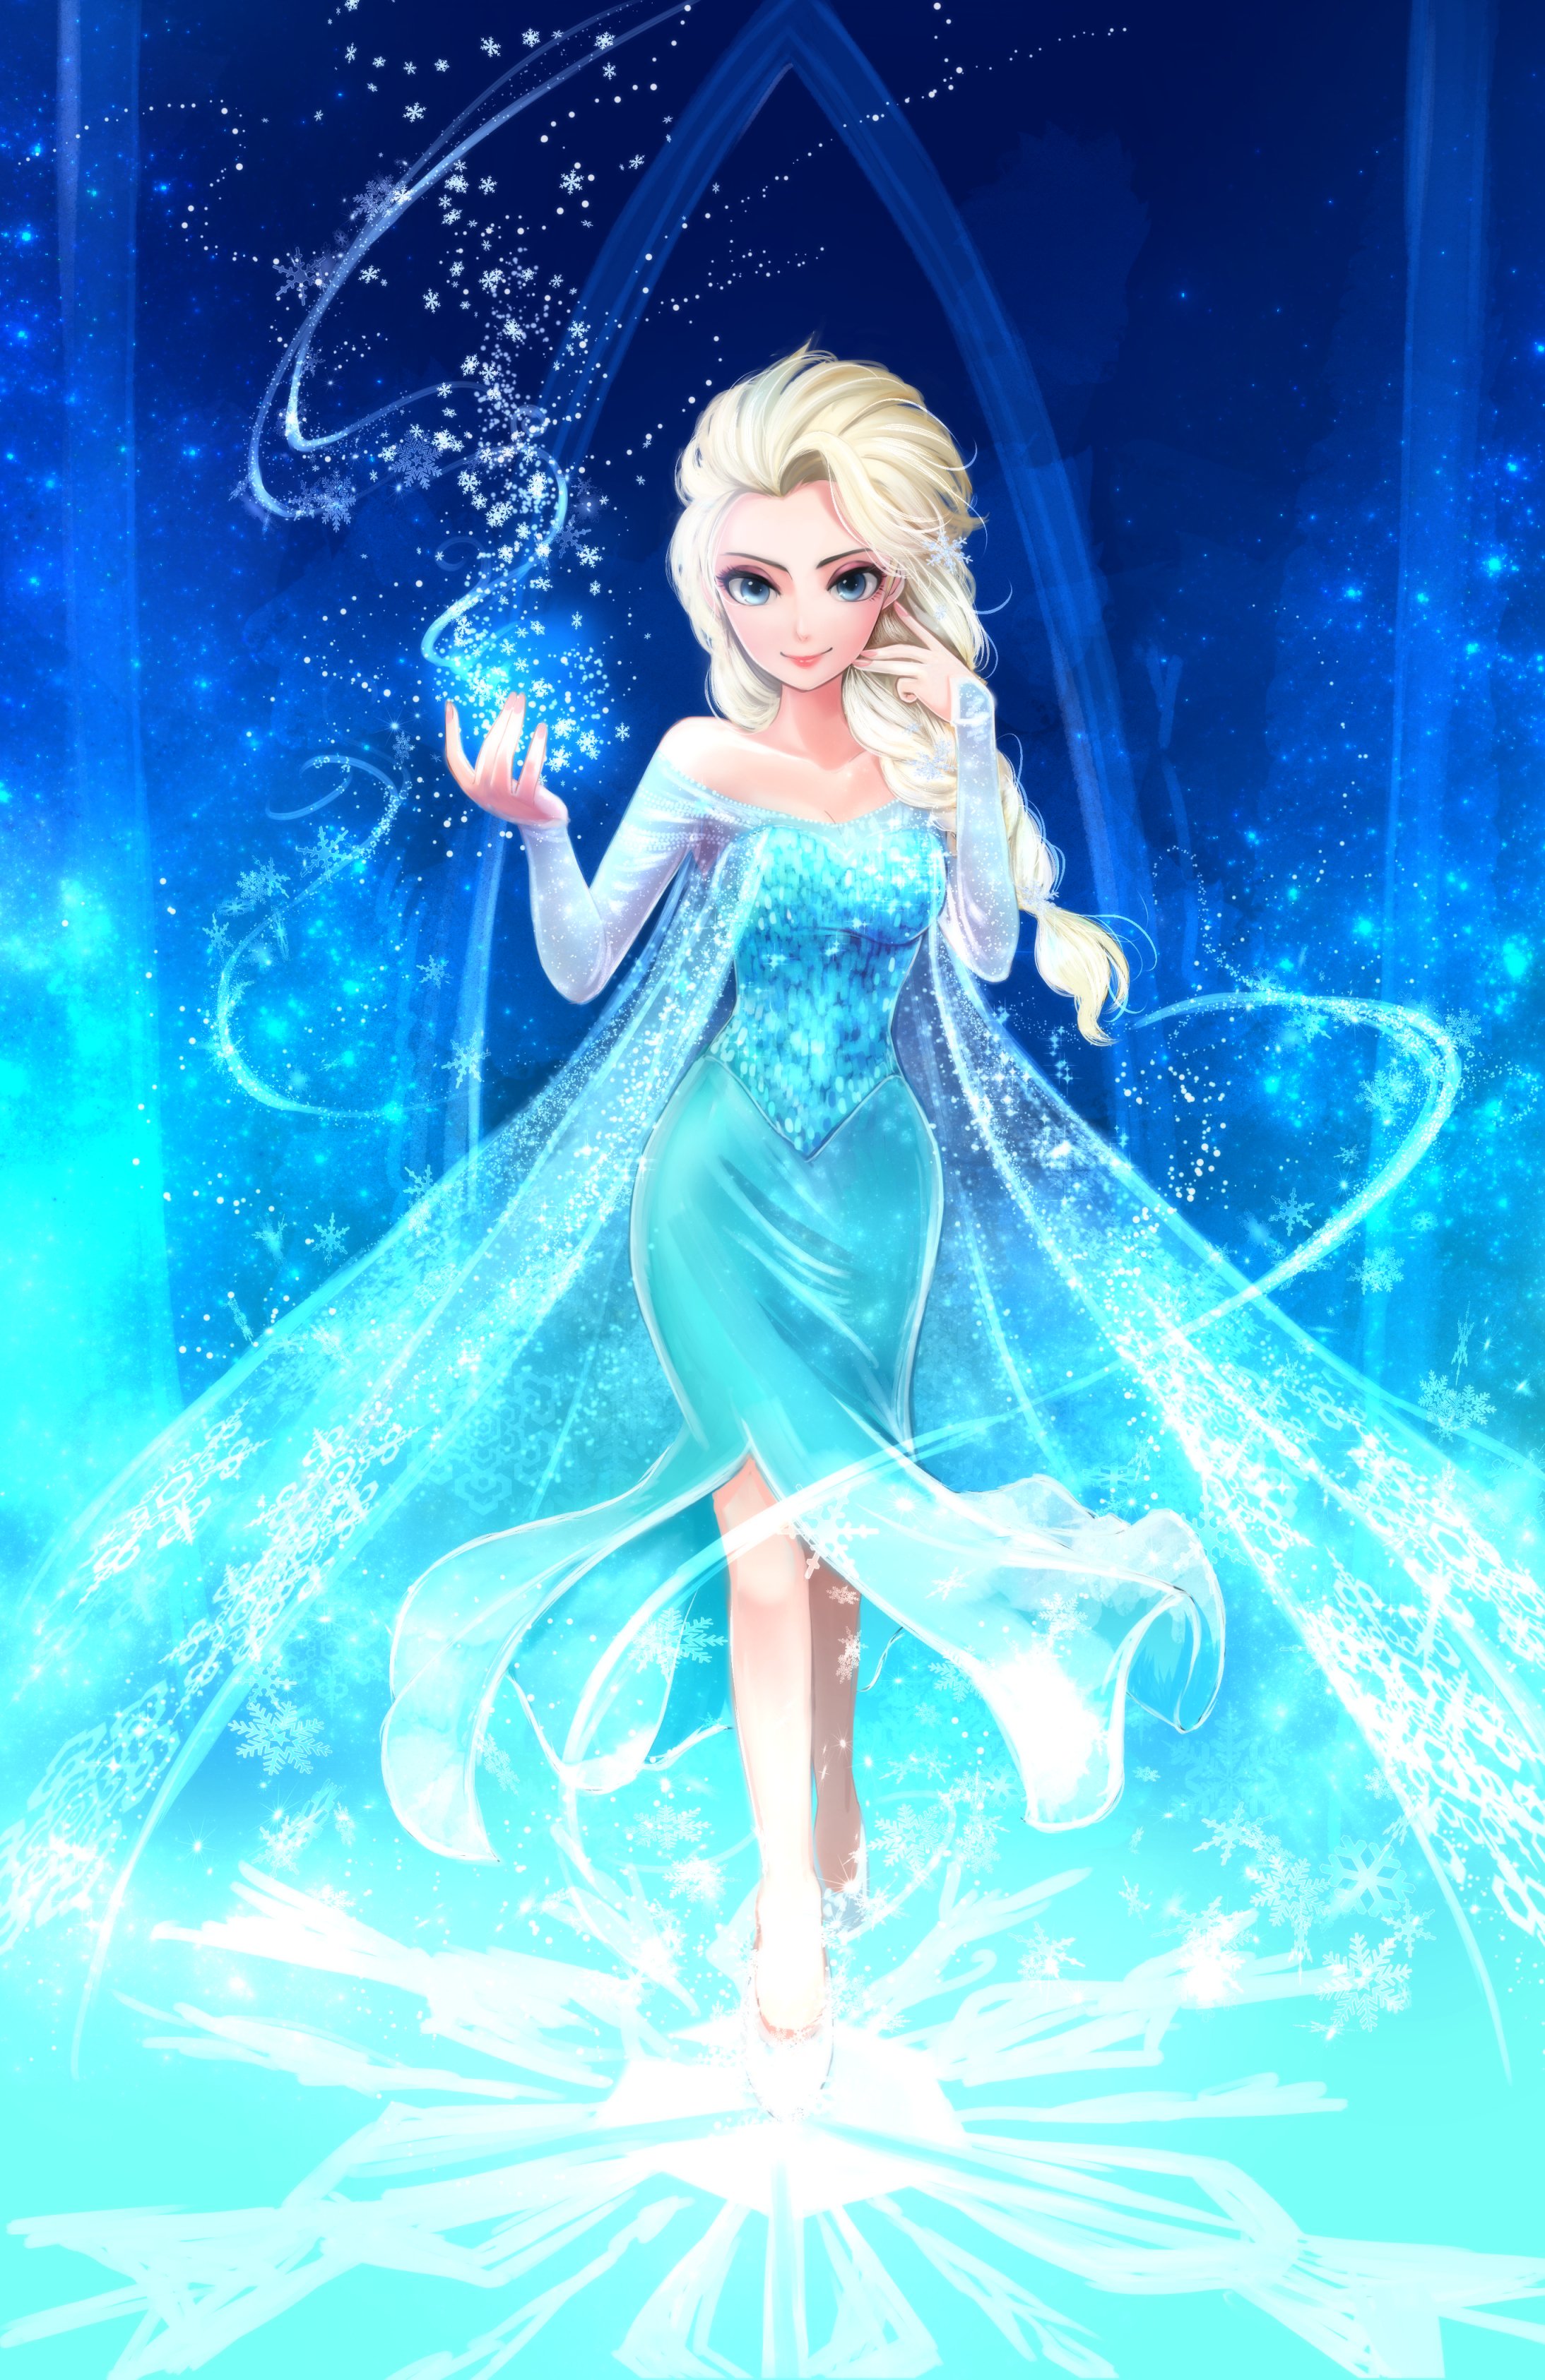 frozen movie wallpaper,fictional character,illustration,cg artwork,electric blue,angel